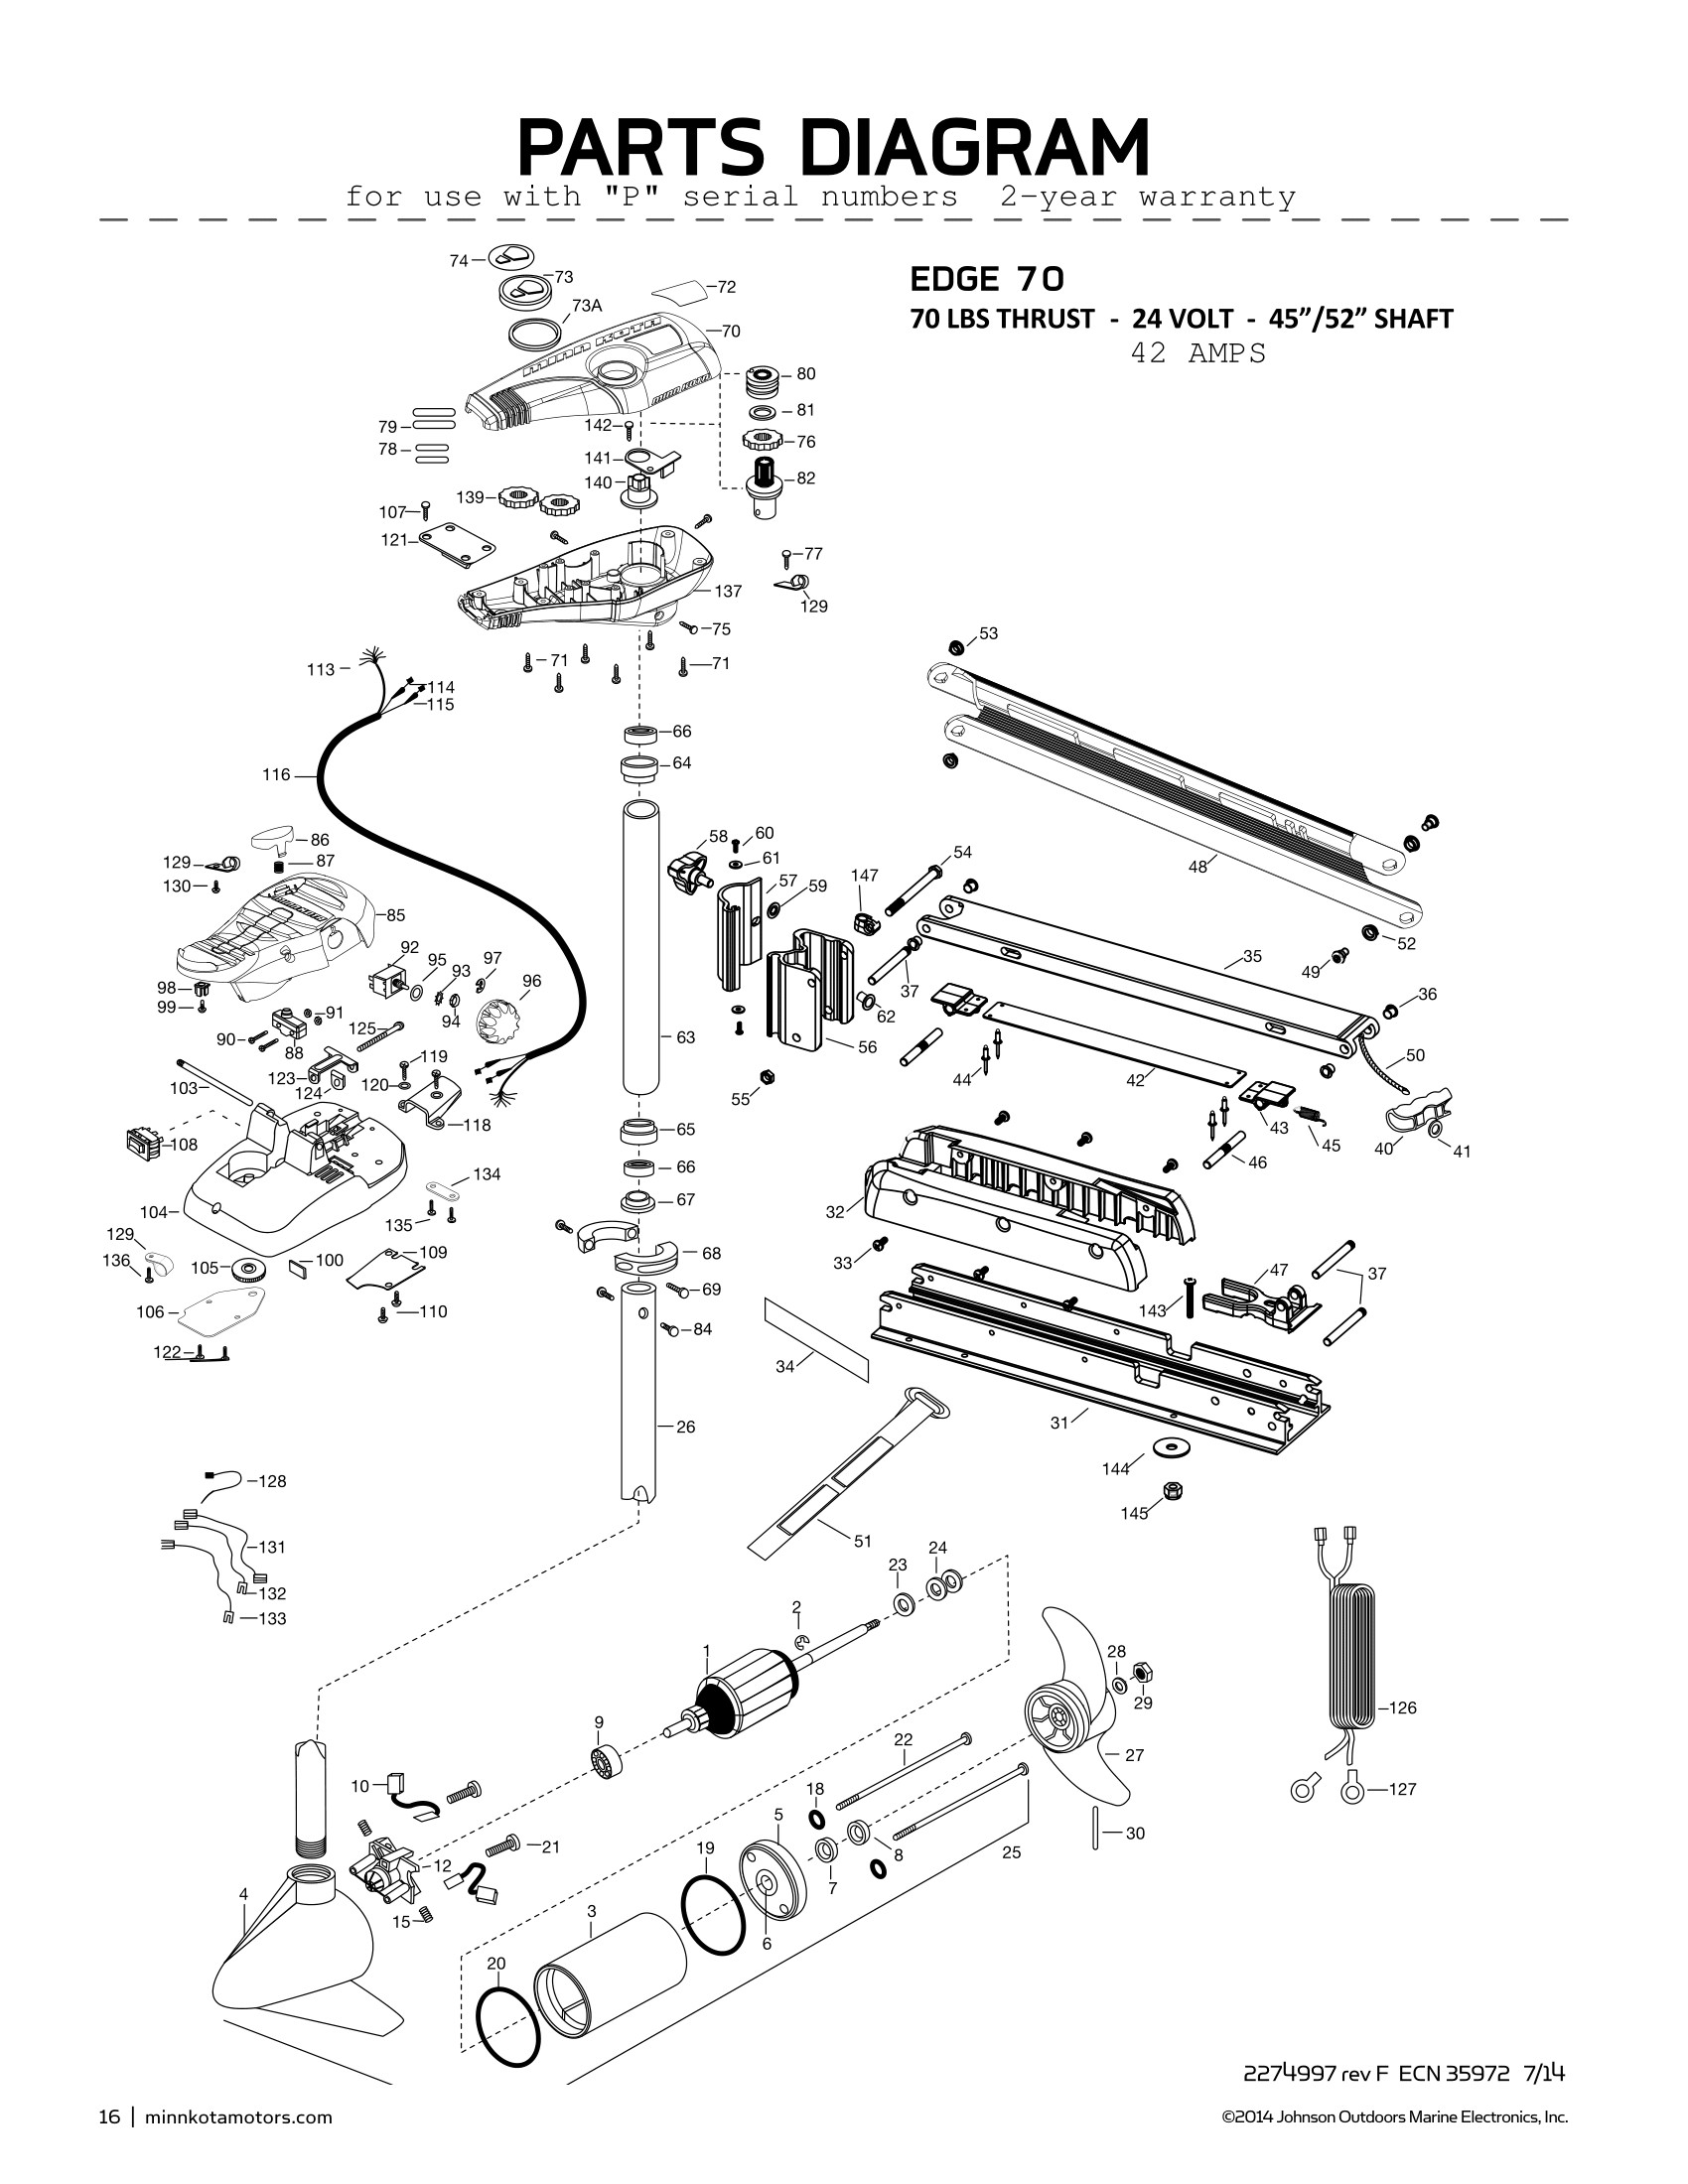 Lct Engine Parts Diagrams Minn Kota Edge 70 Parts 2015 From Fish307 Of Lct Engine Parts Diagrams